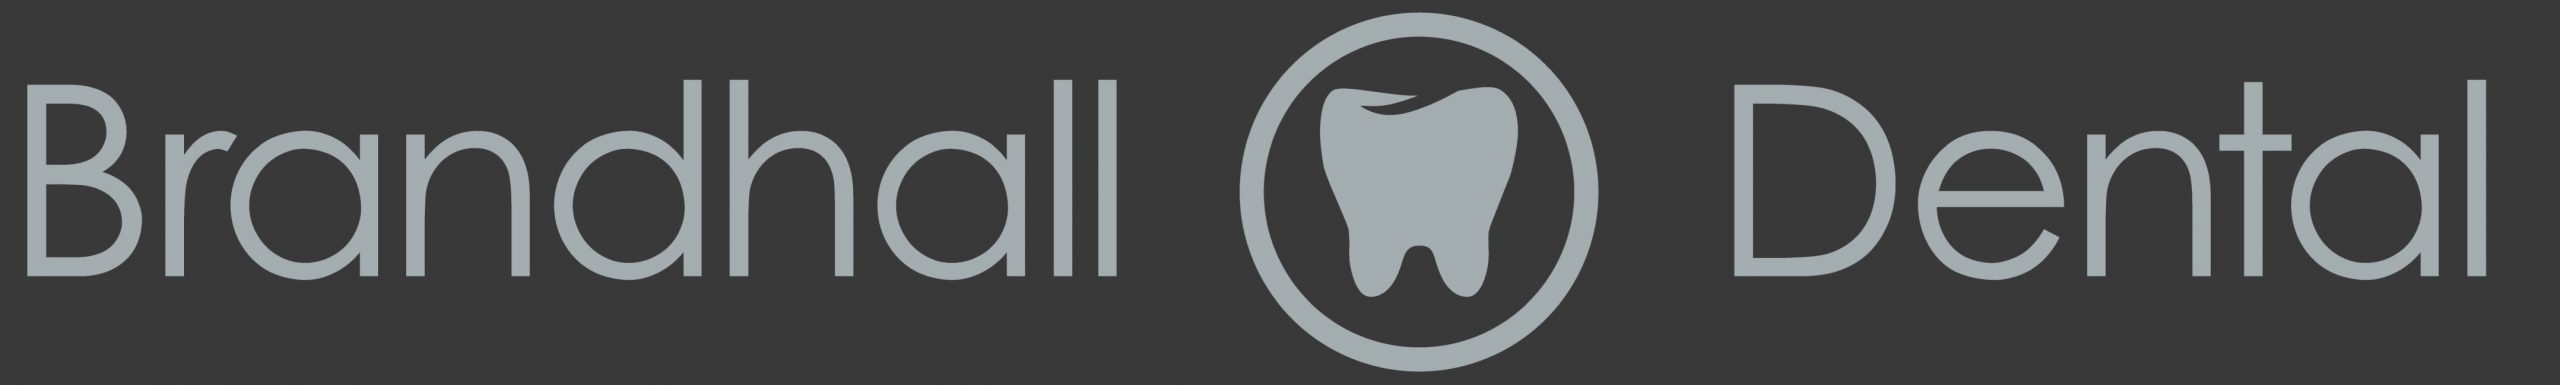 Brandhall Dental